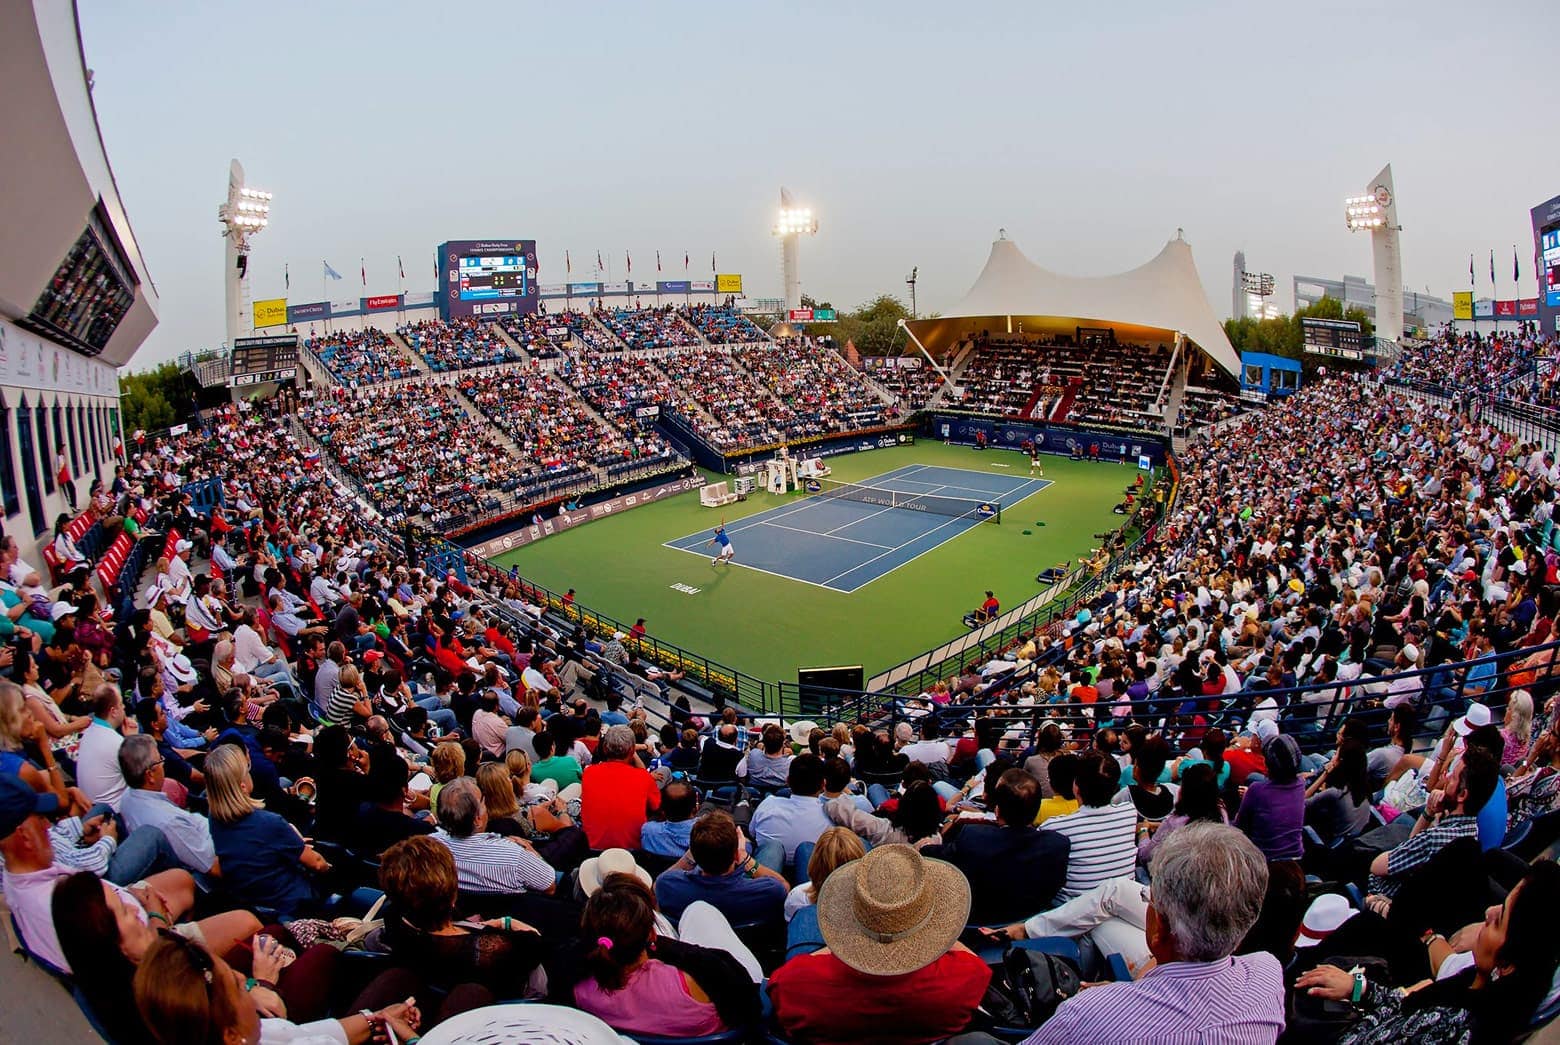 Dubai Tennis Championships 2023 schedule